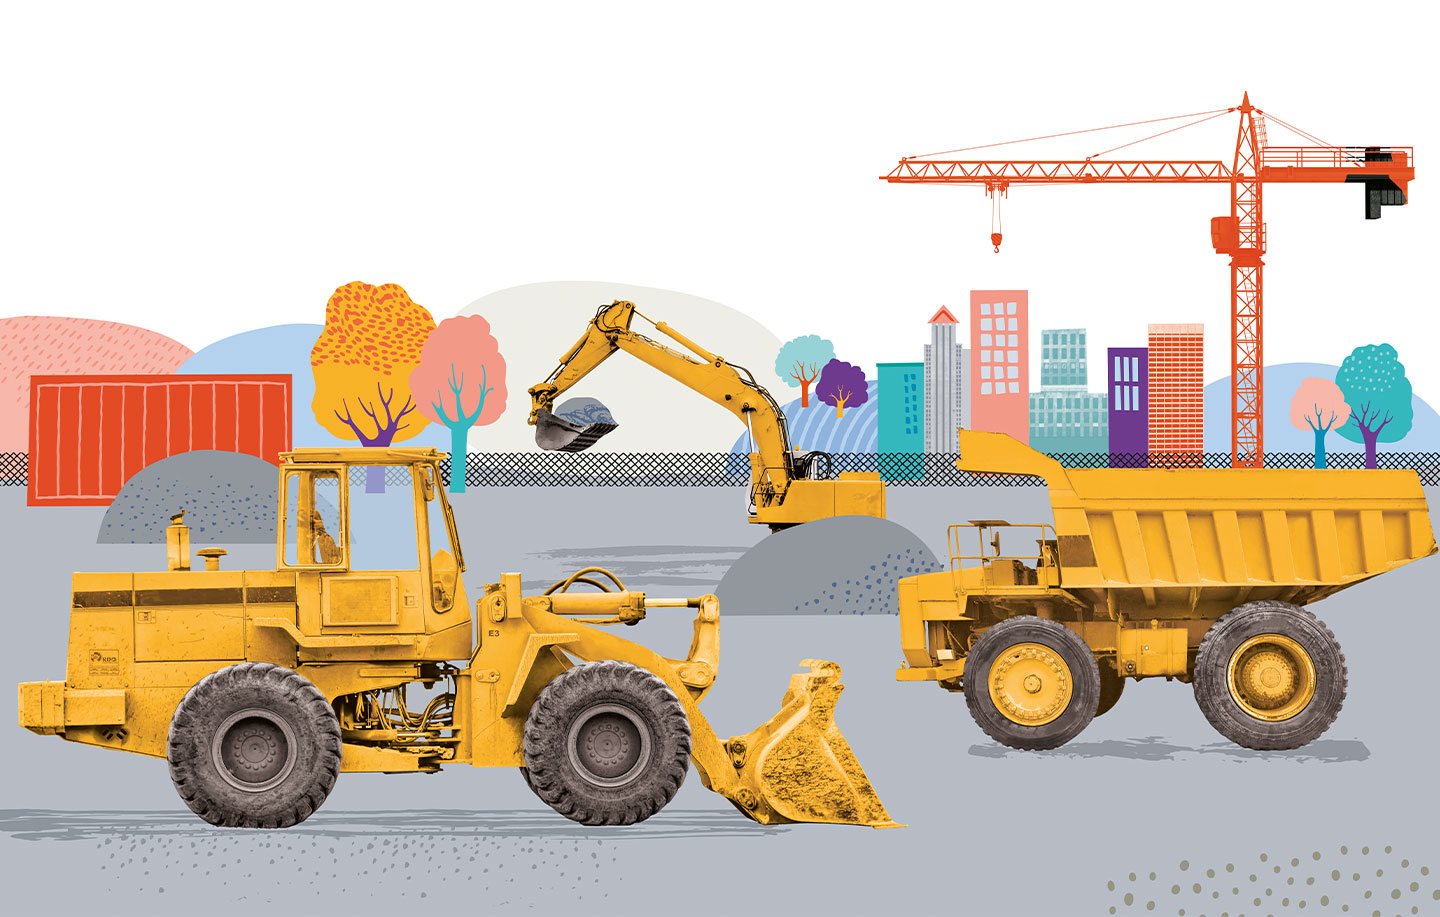 Illustration of Construction site